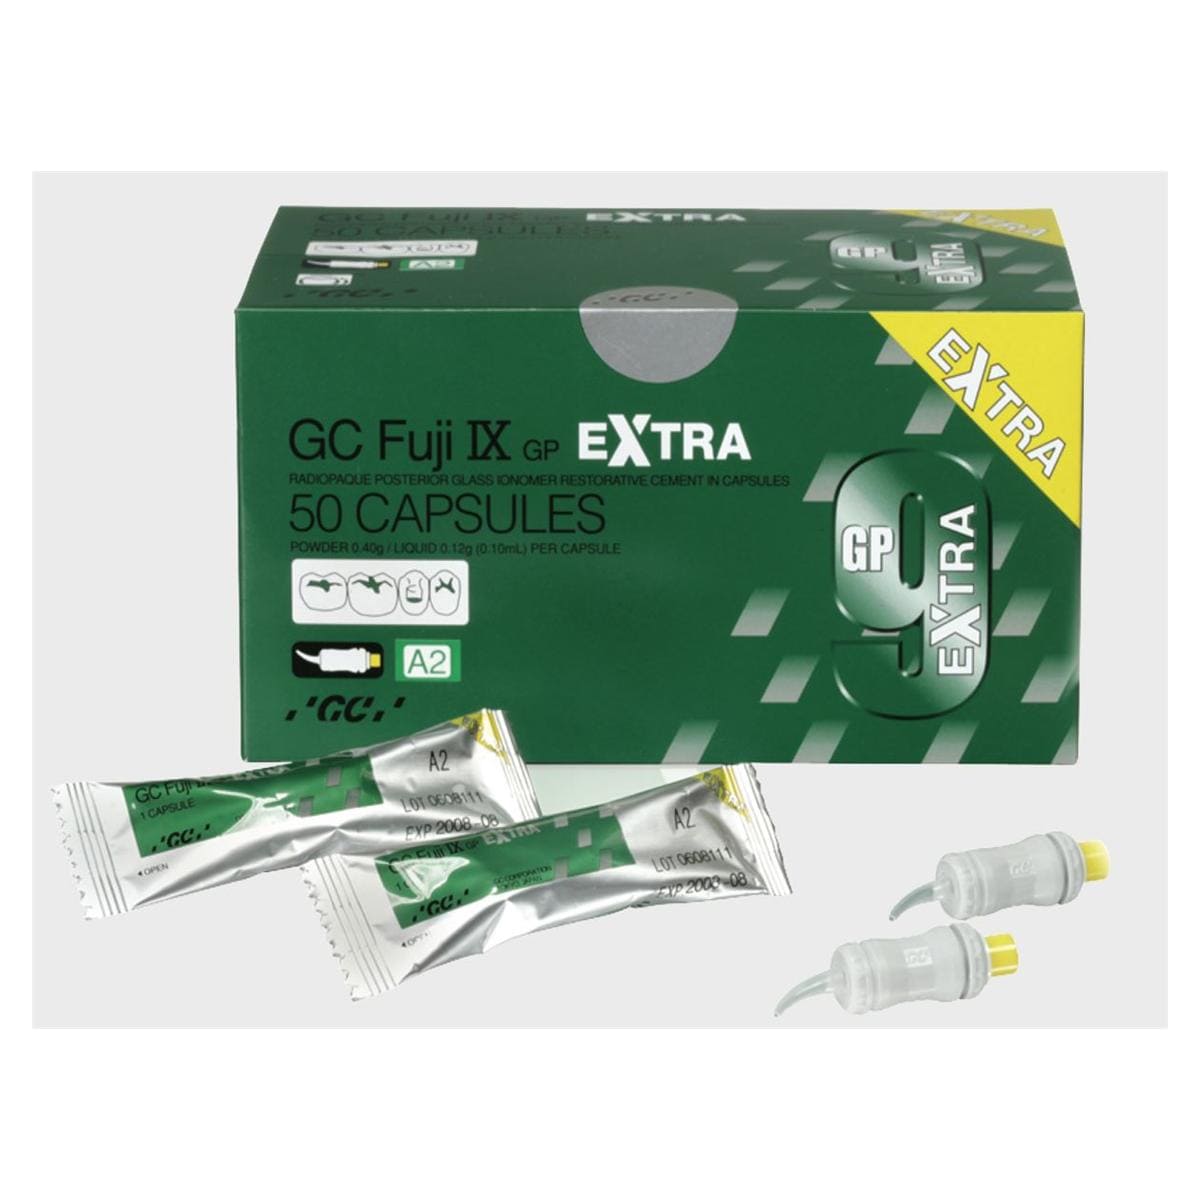 Fuji IX 9 GP Extra GI Capsules A2 50pk